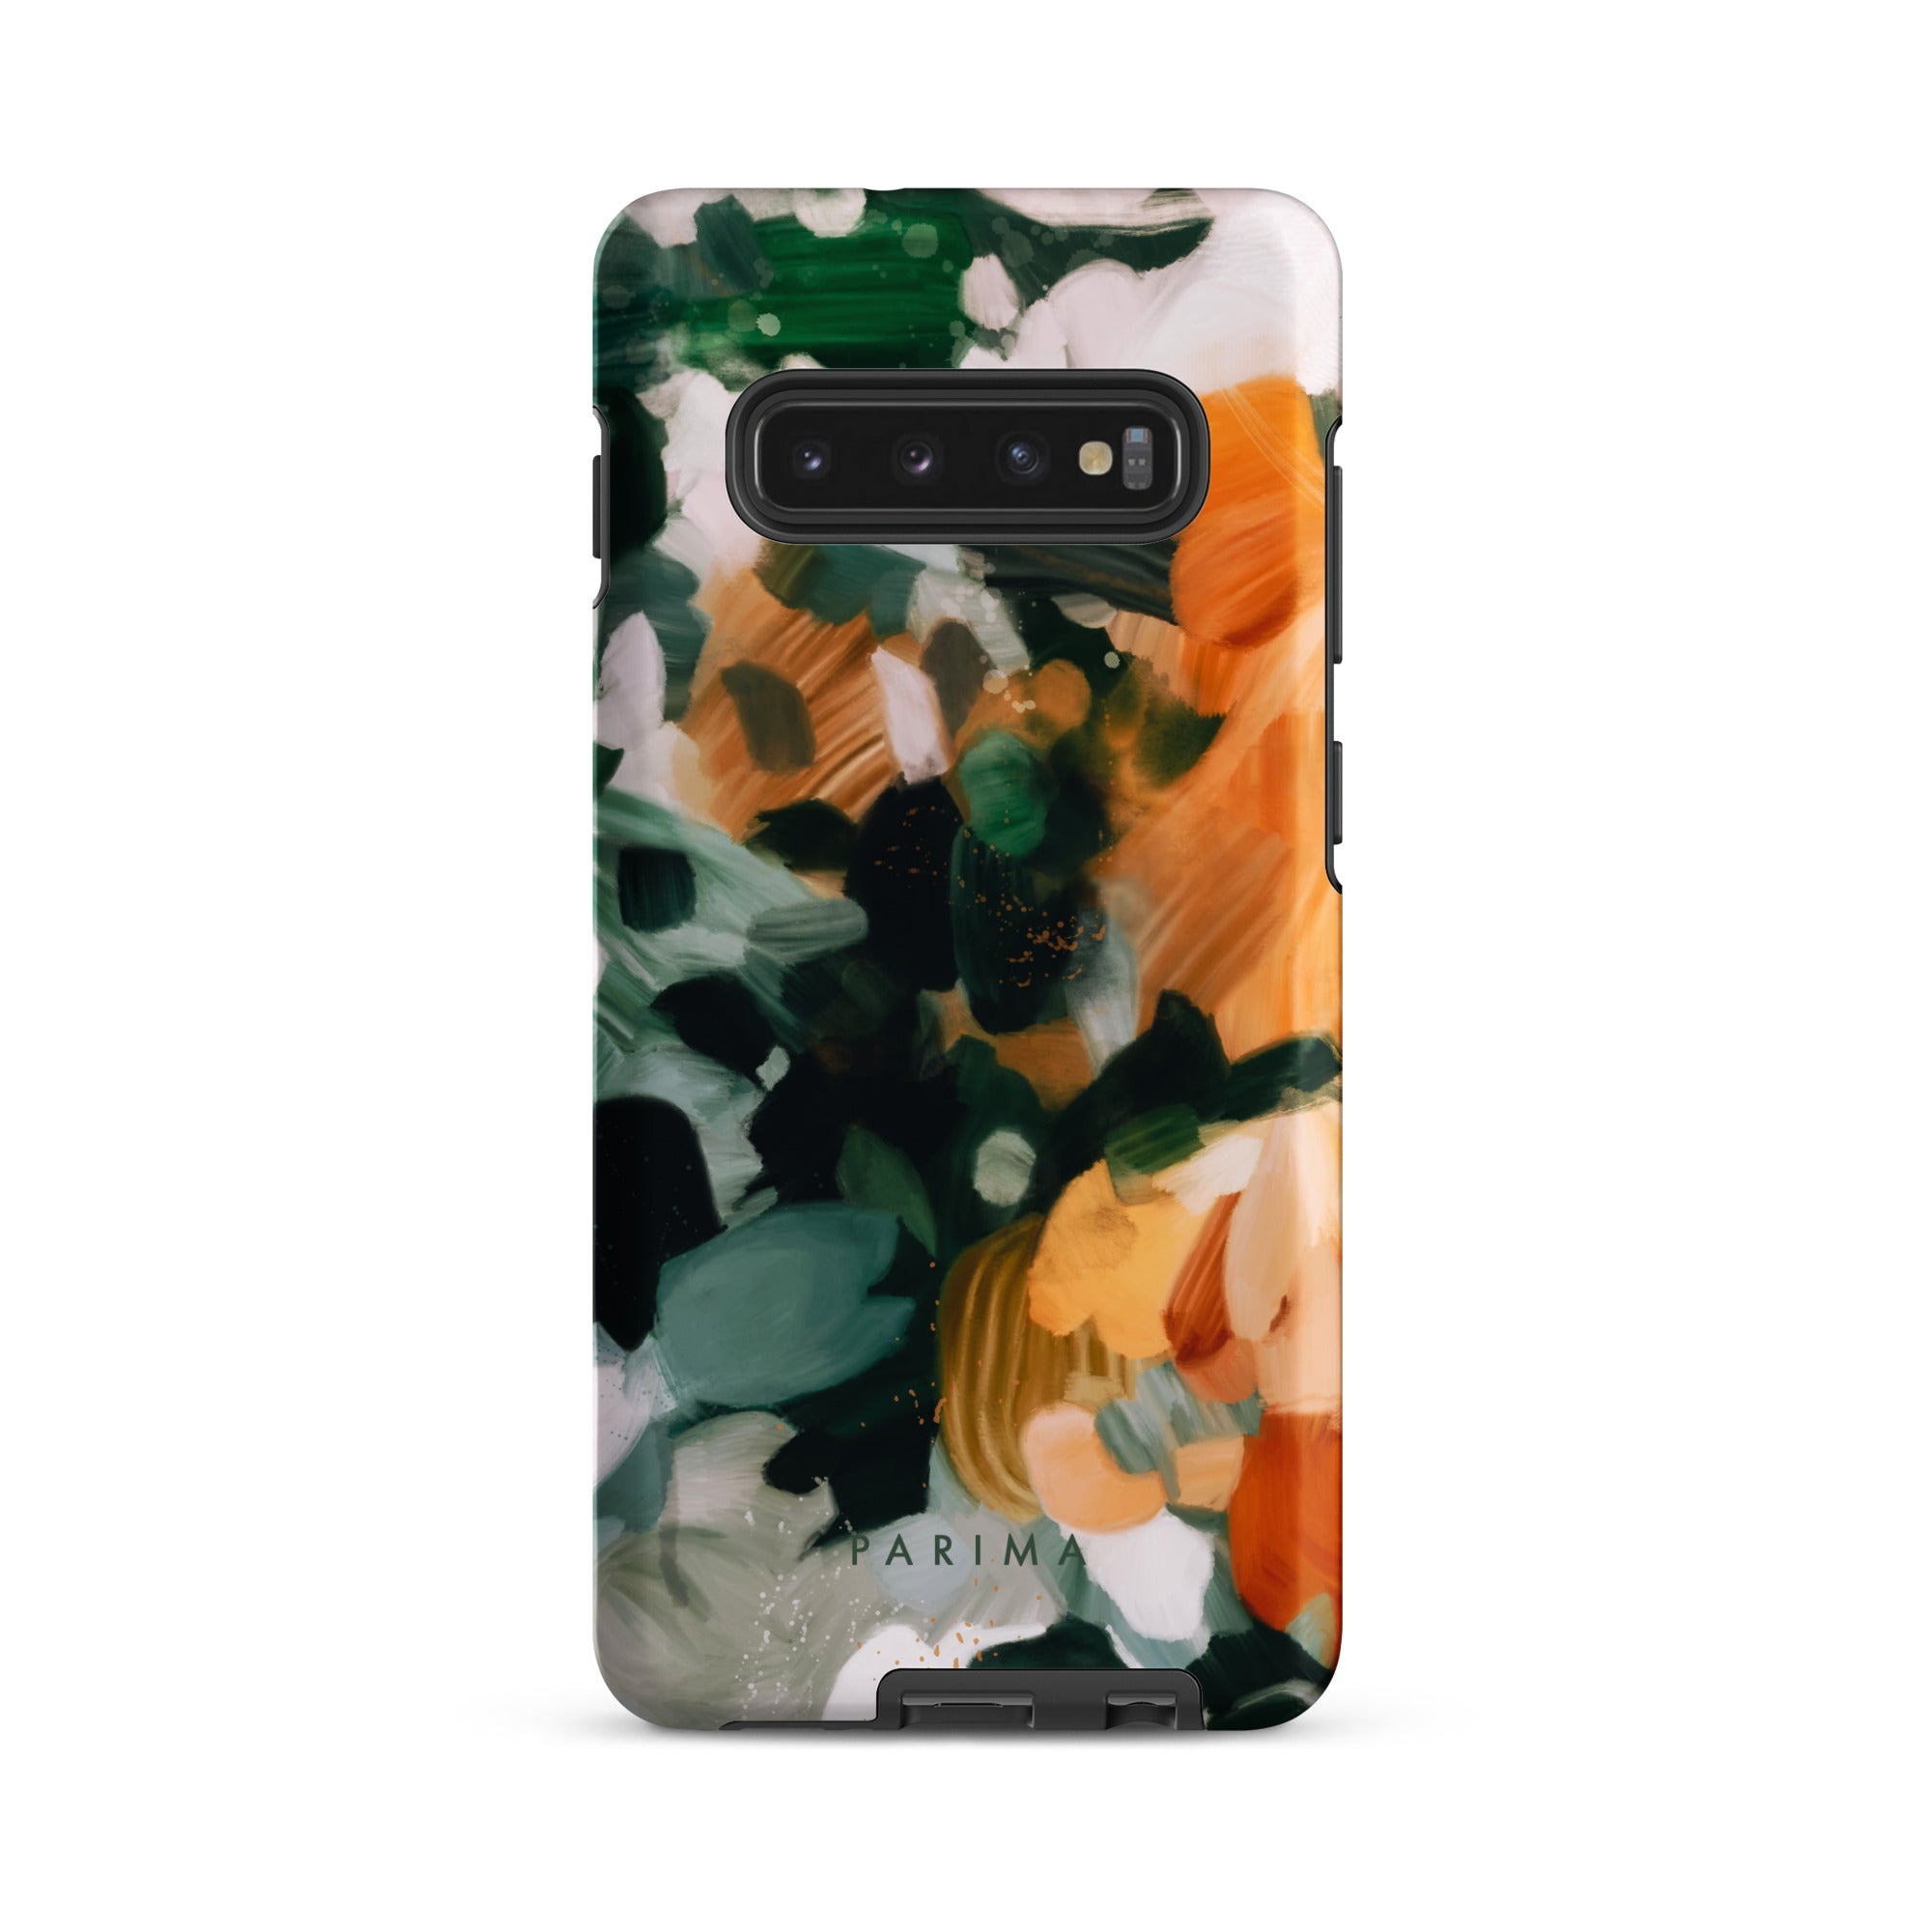 Aspen, green and orange abstract art on Samsung Galaxy S10 Plus tough case by Parima Studio